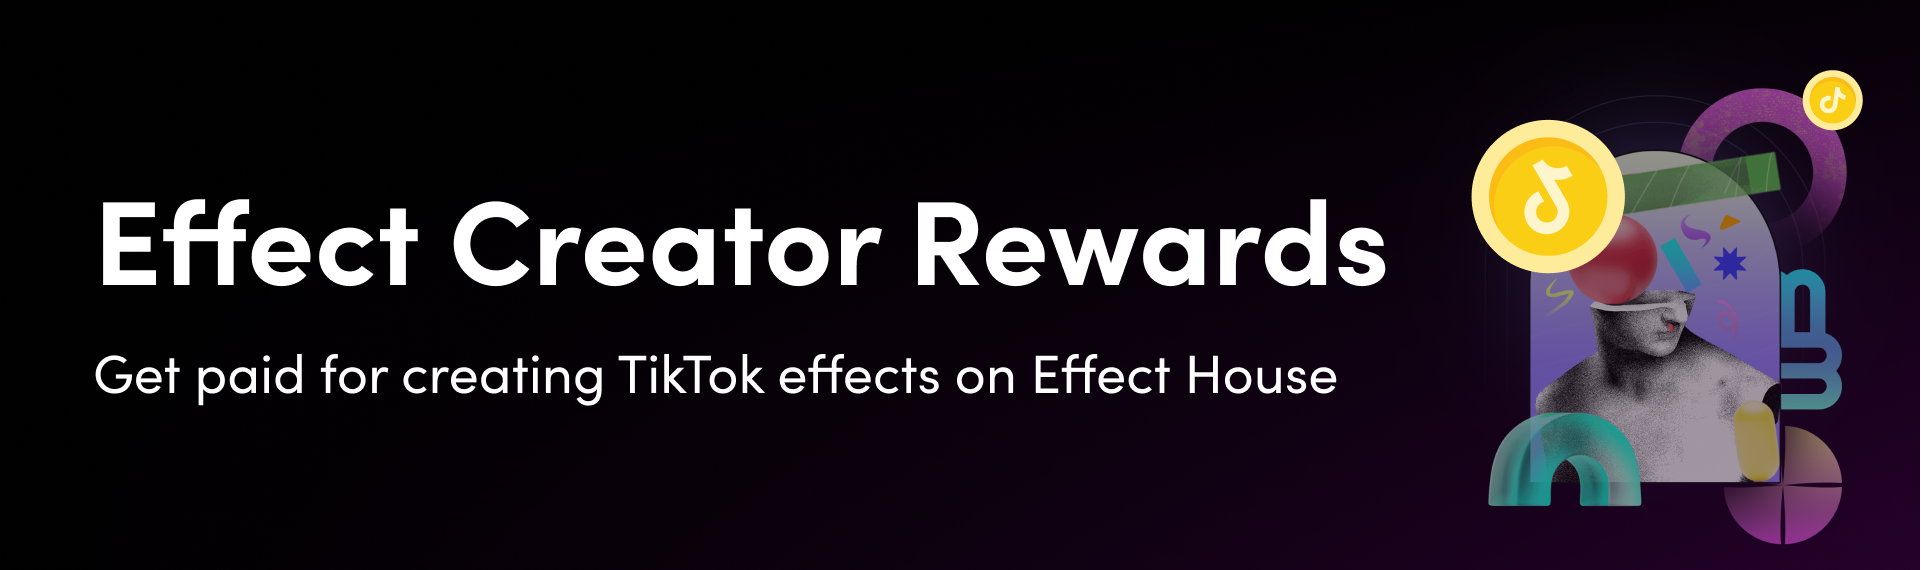 introducing-effect-creator-rewards